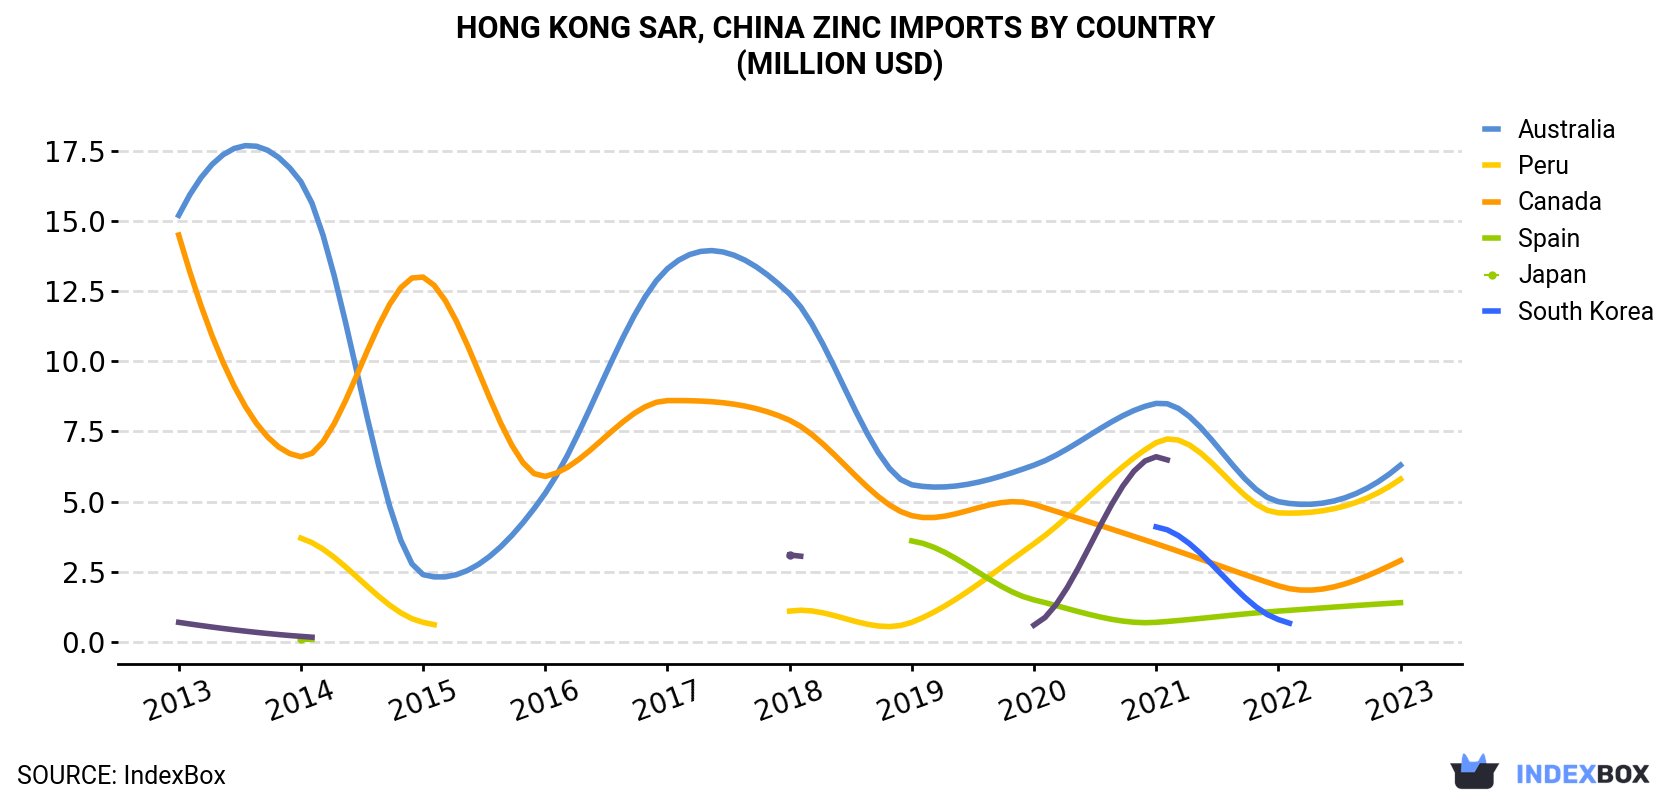 Hong Kong Zinc Imports By Country (Million USD)